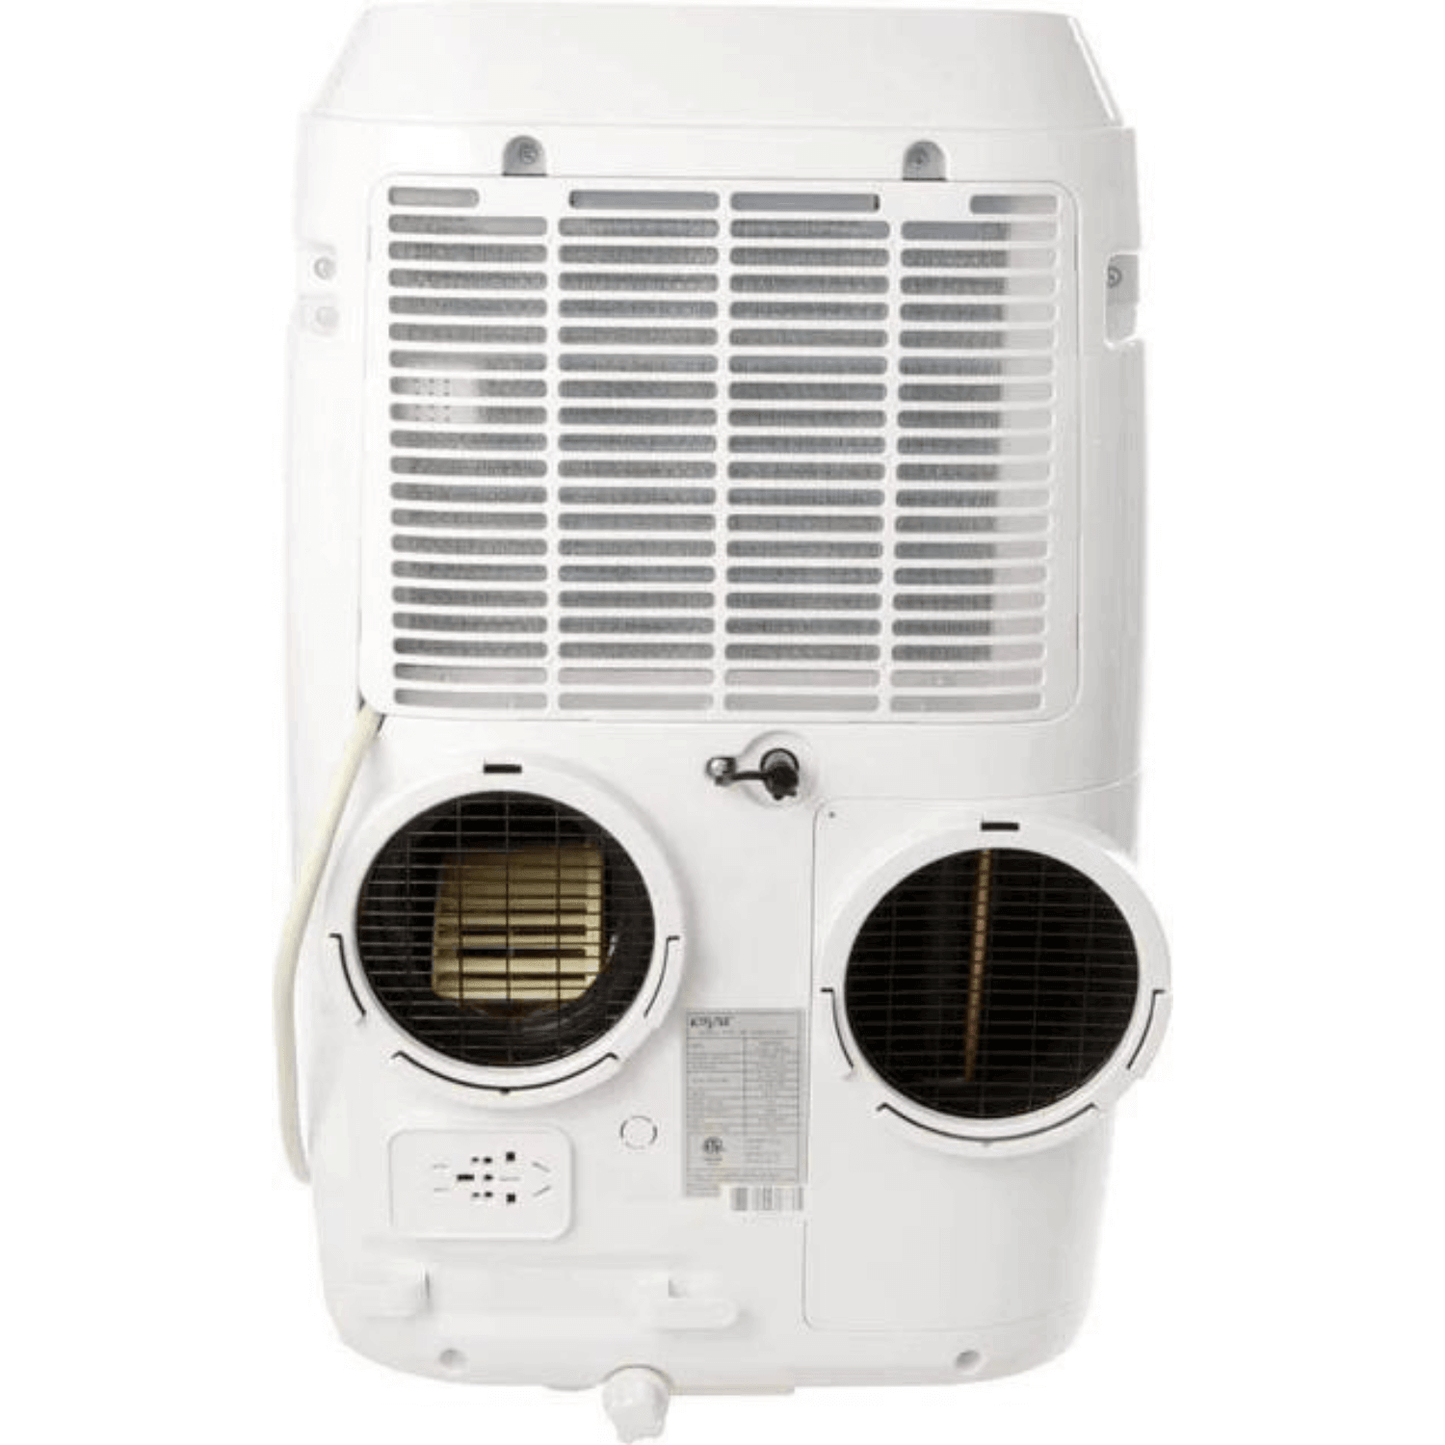 Active Air Portable Air Conditioner, 14,000 BTU ACAN1402 Climate Control